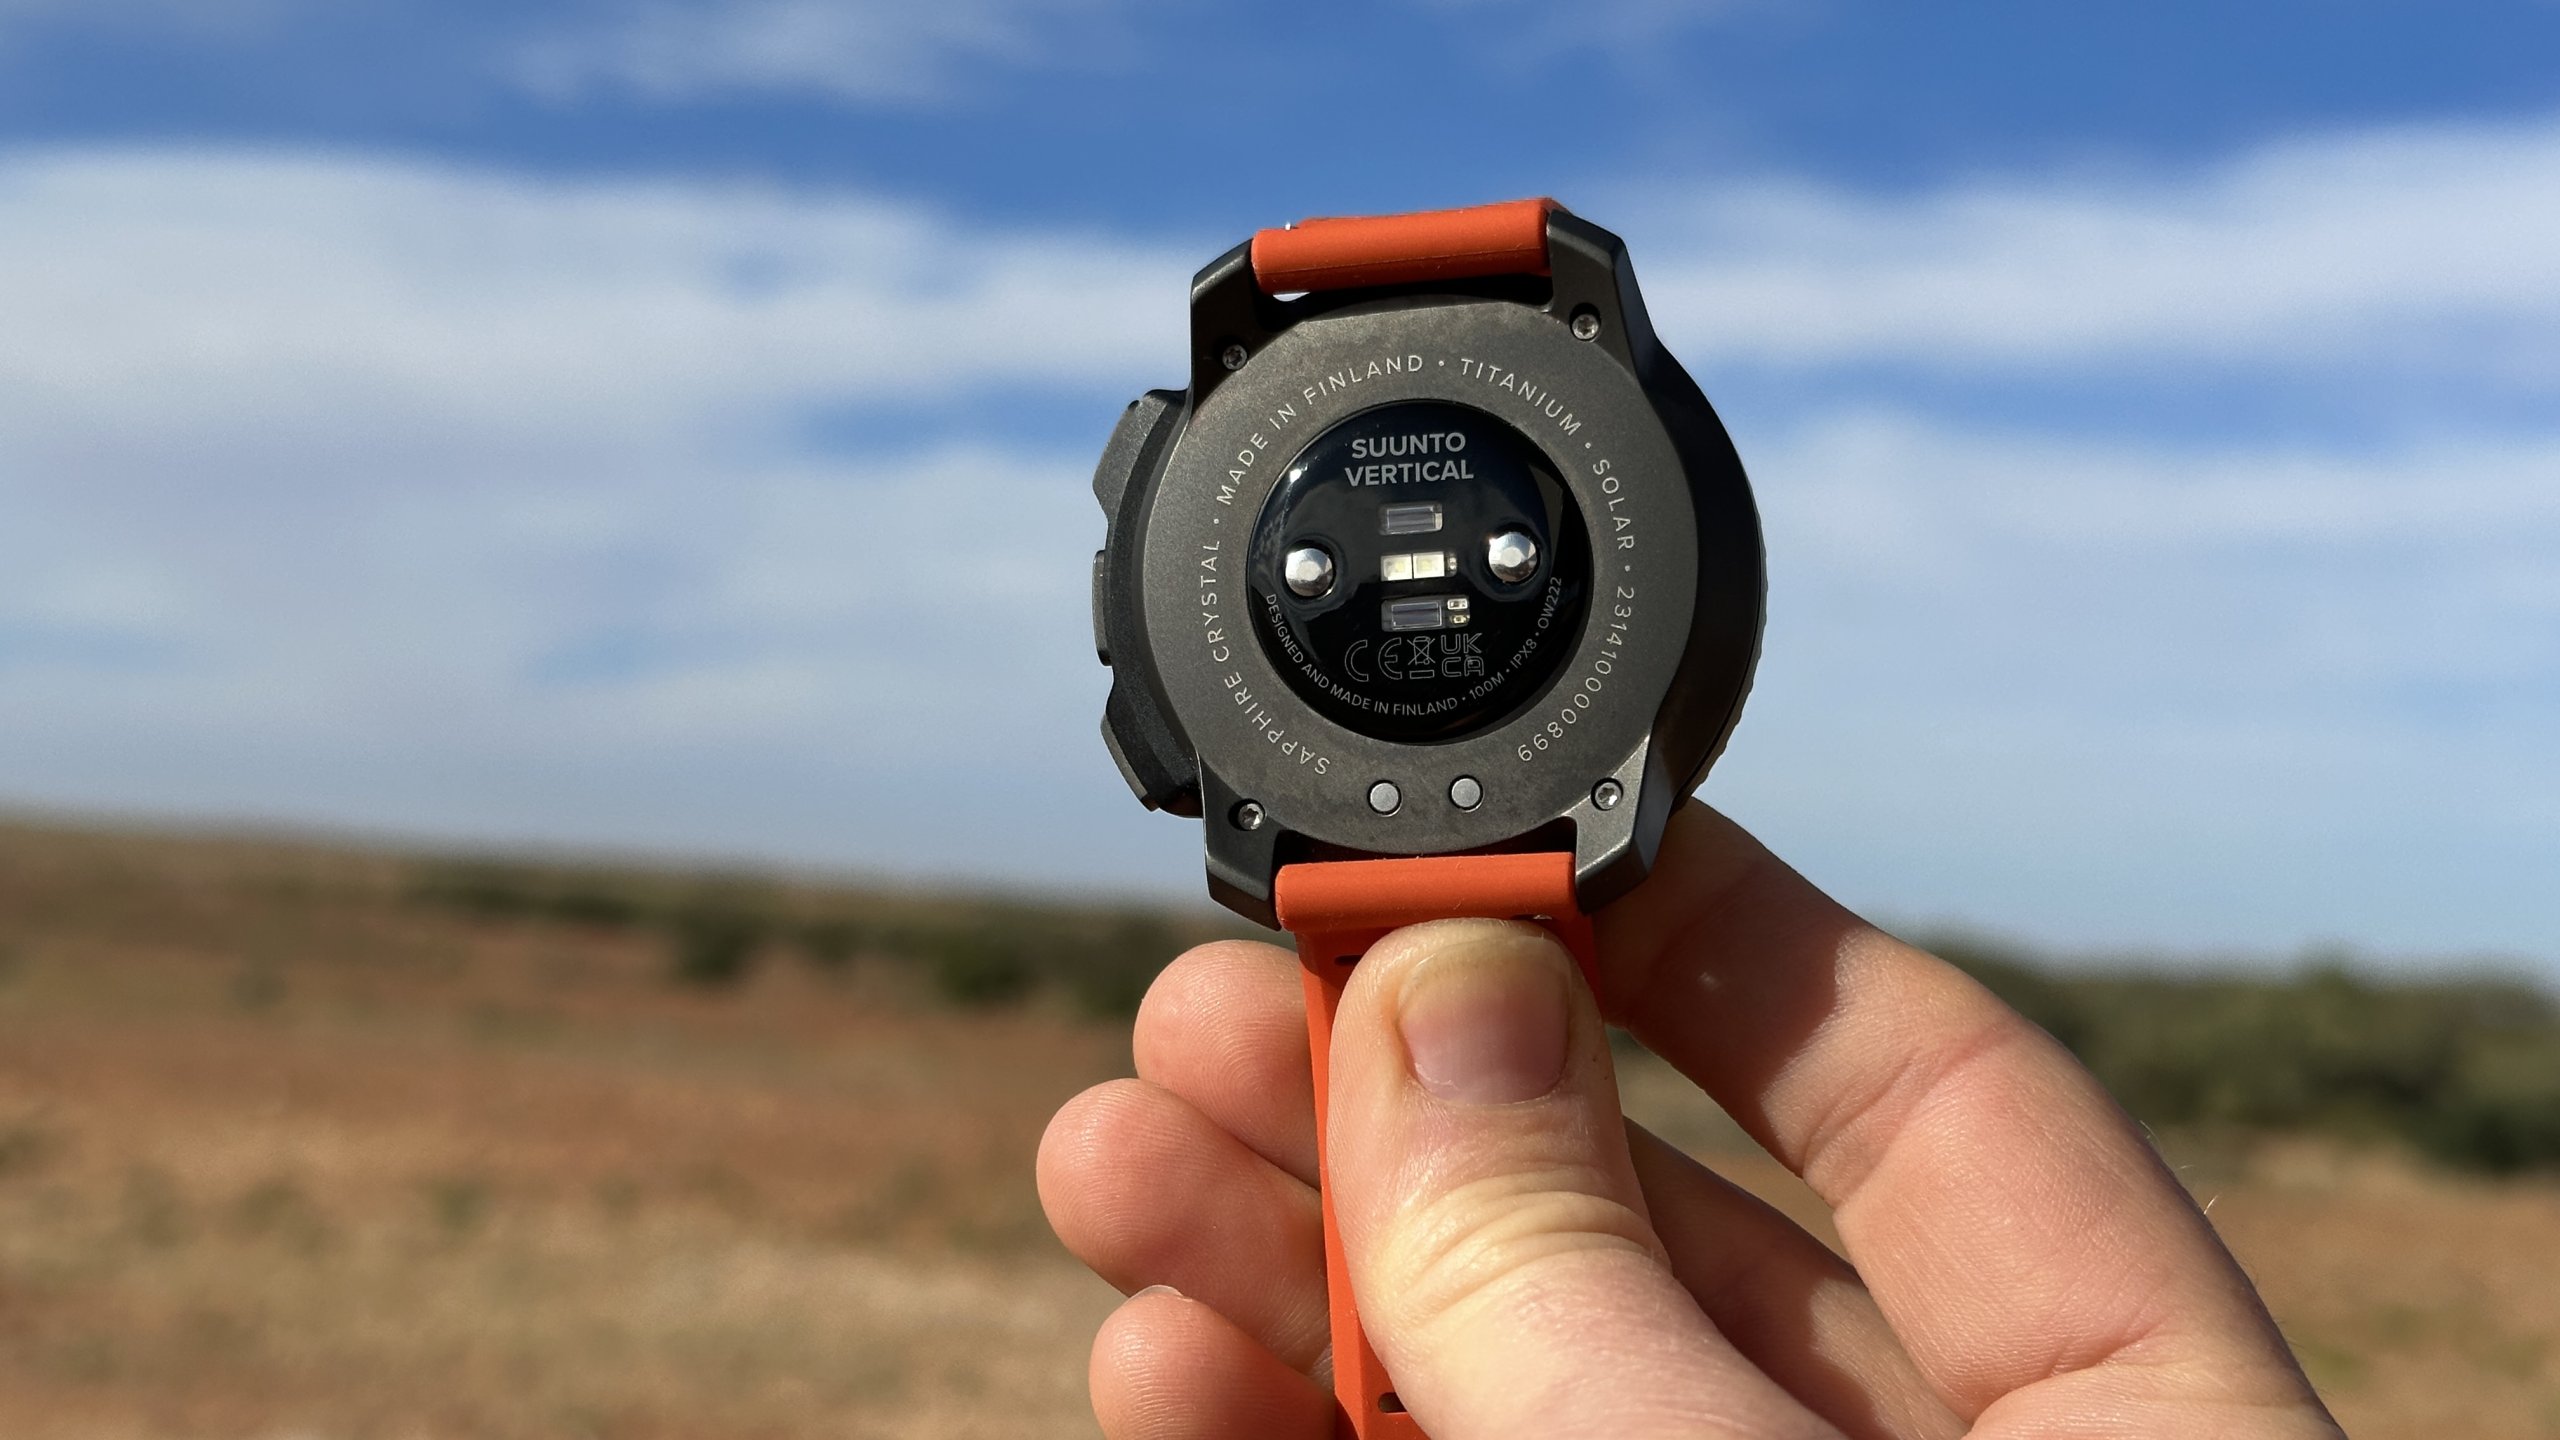 Review video] Suunto 5 Peak smartwatch features & performance